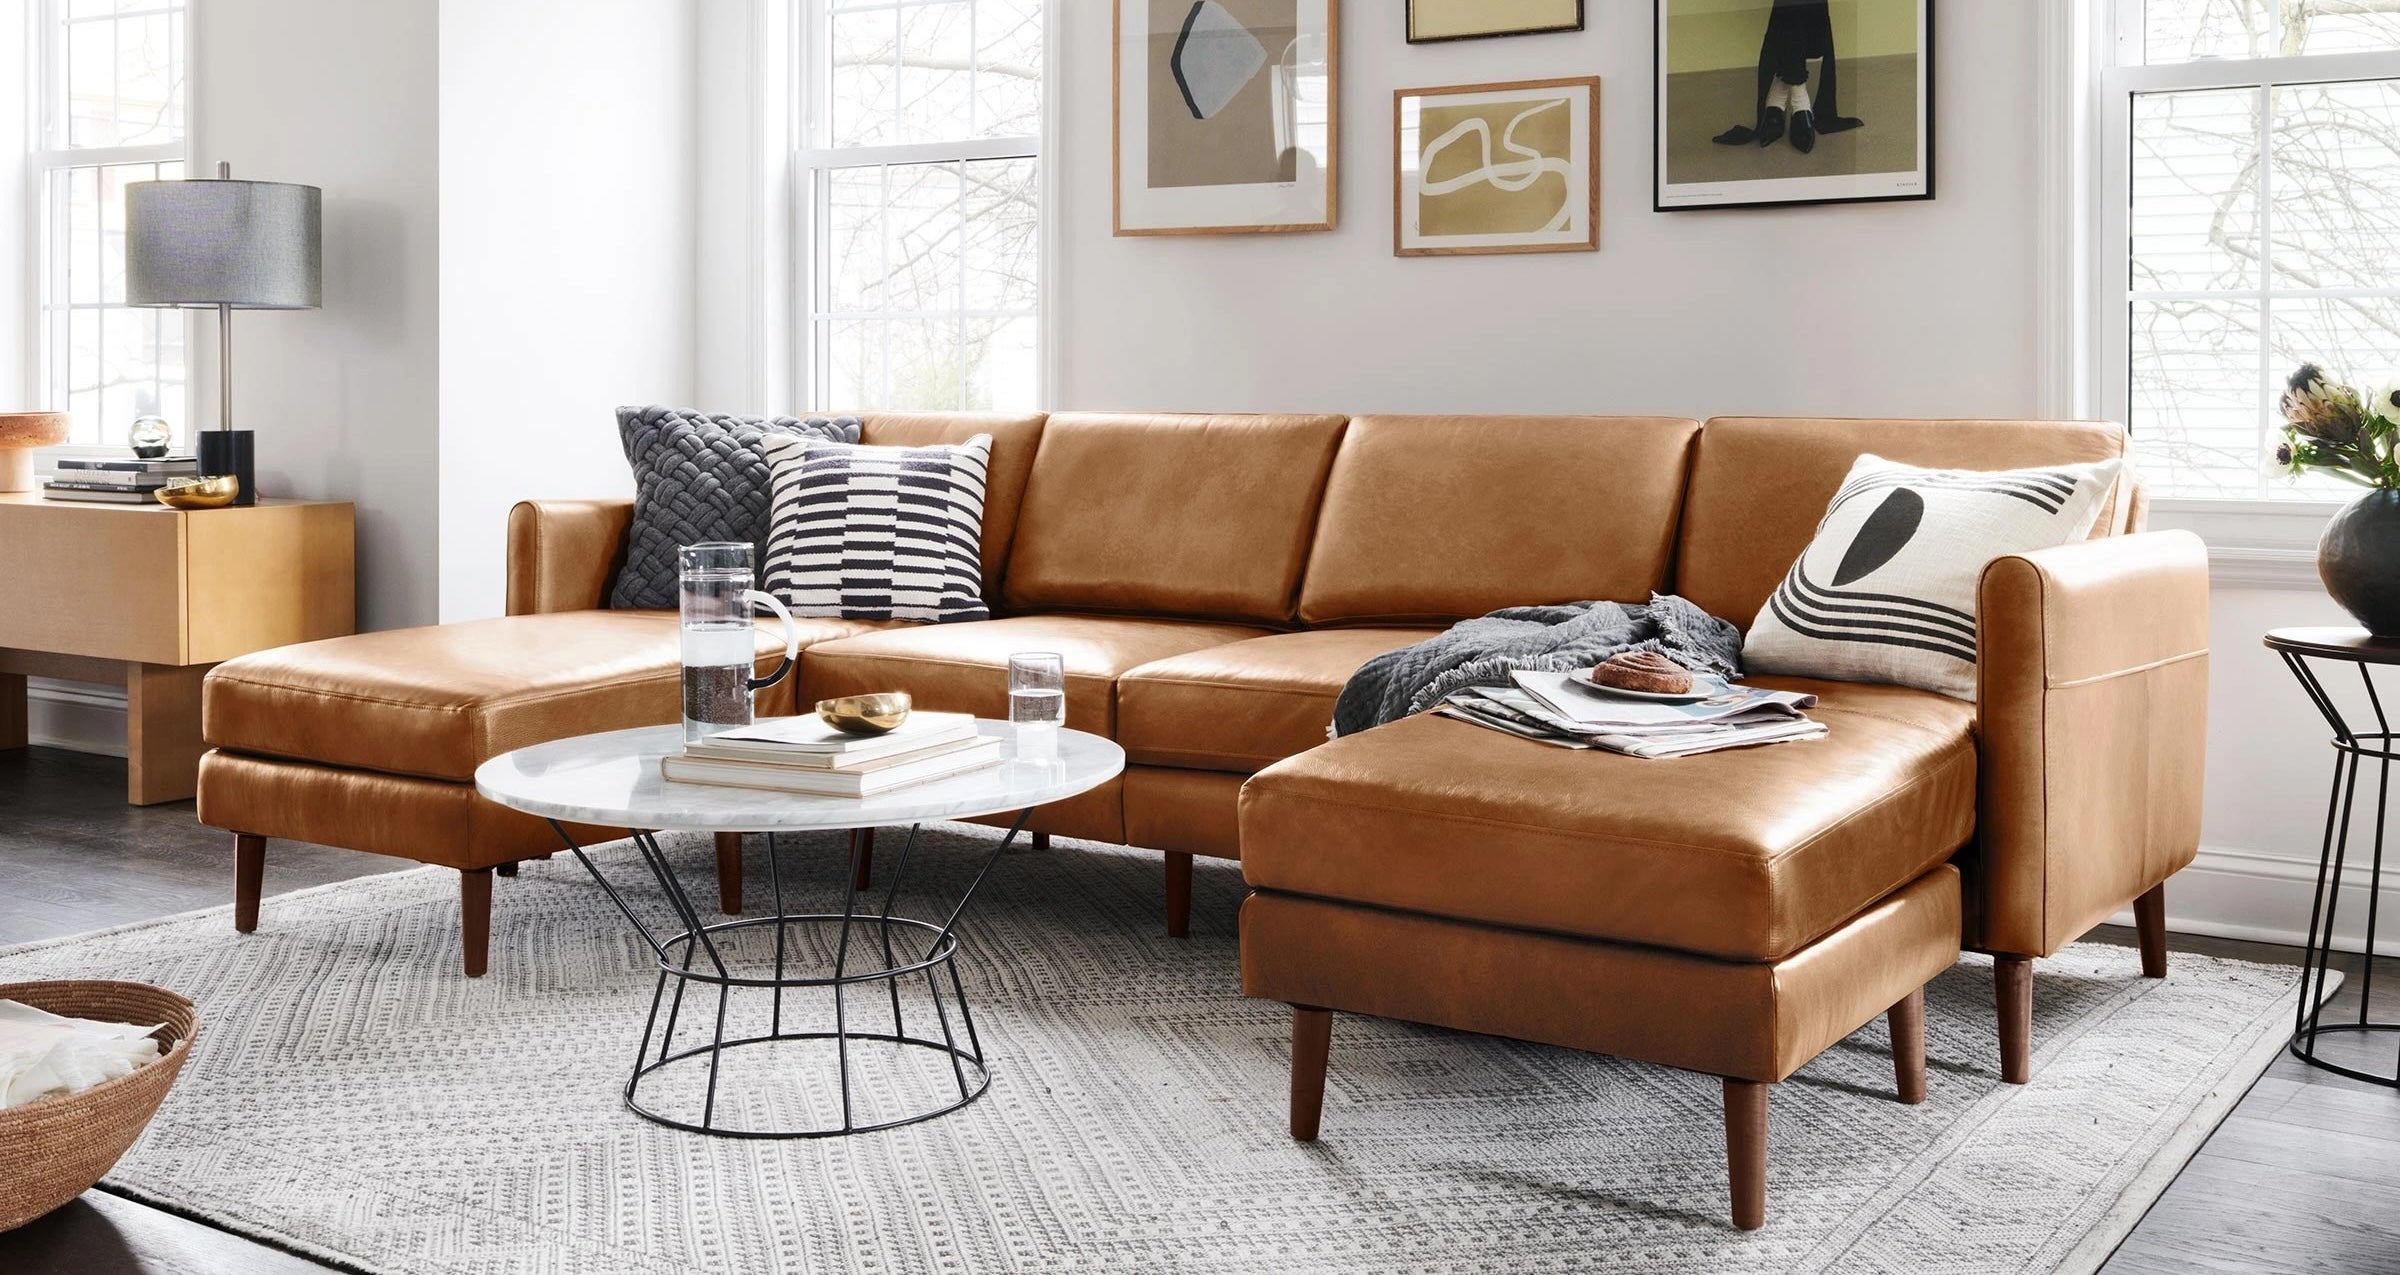 Shop Burrow's new queen-sized Shift Sleeper Sofa